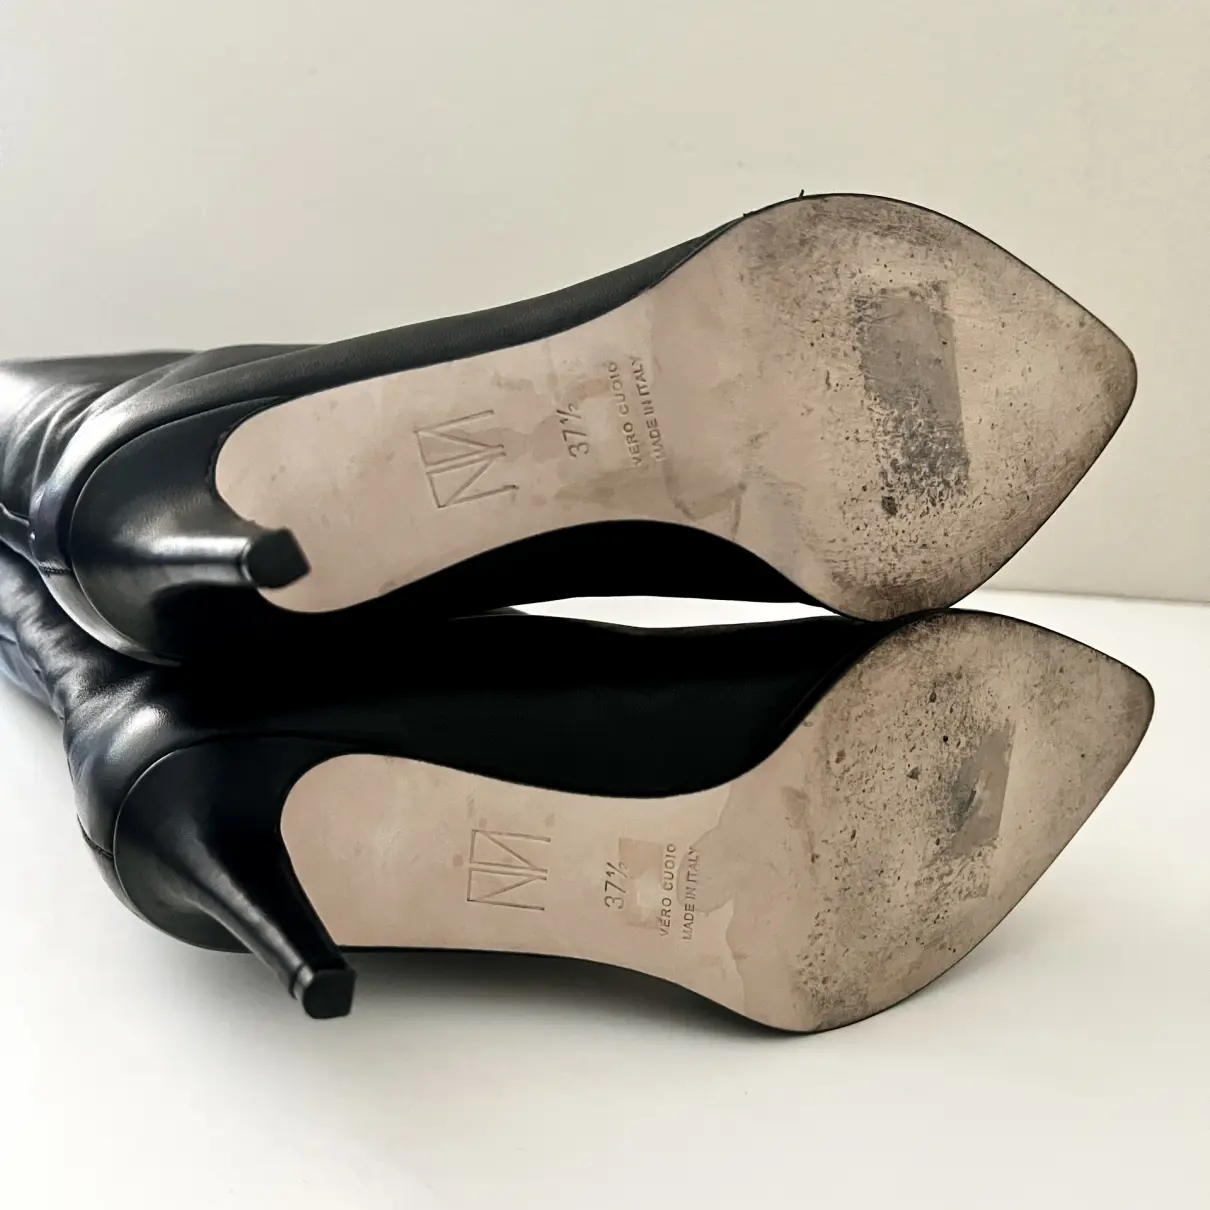 Buy Tamara Mellon Leather boots online